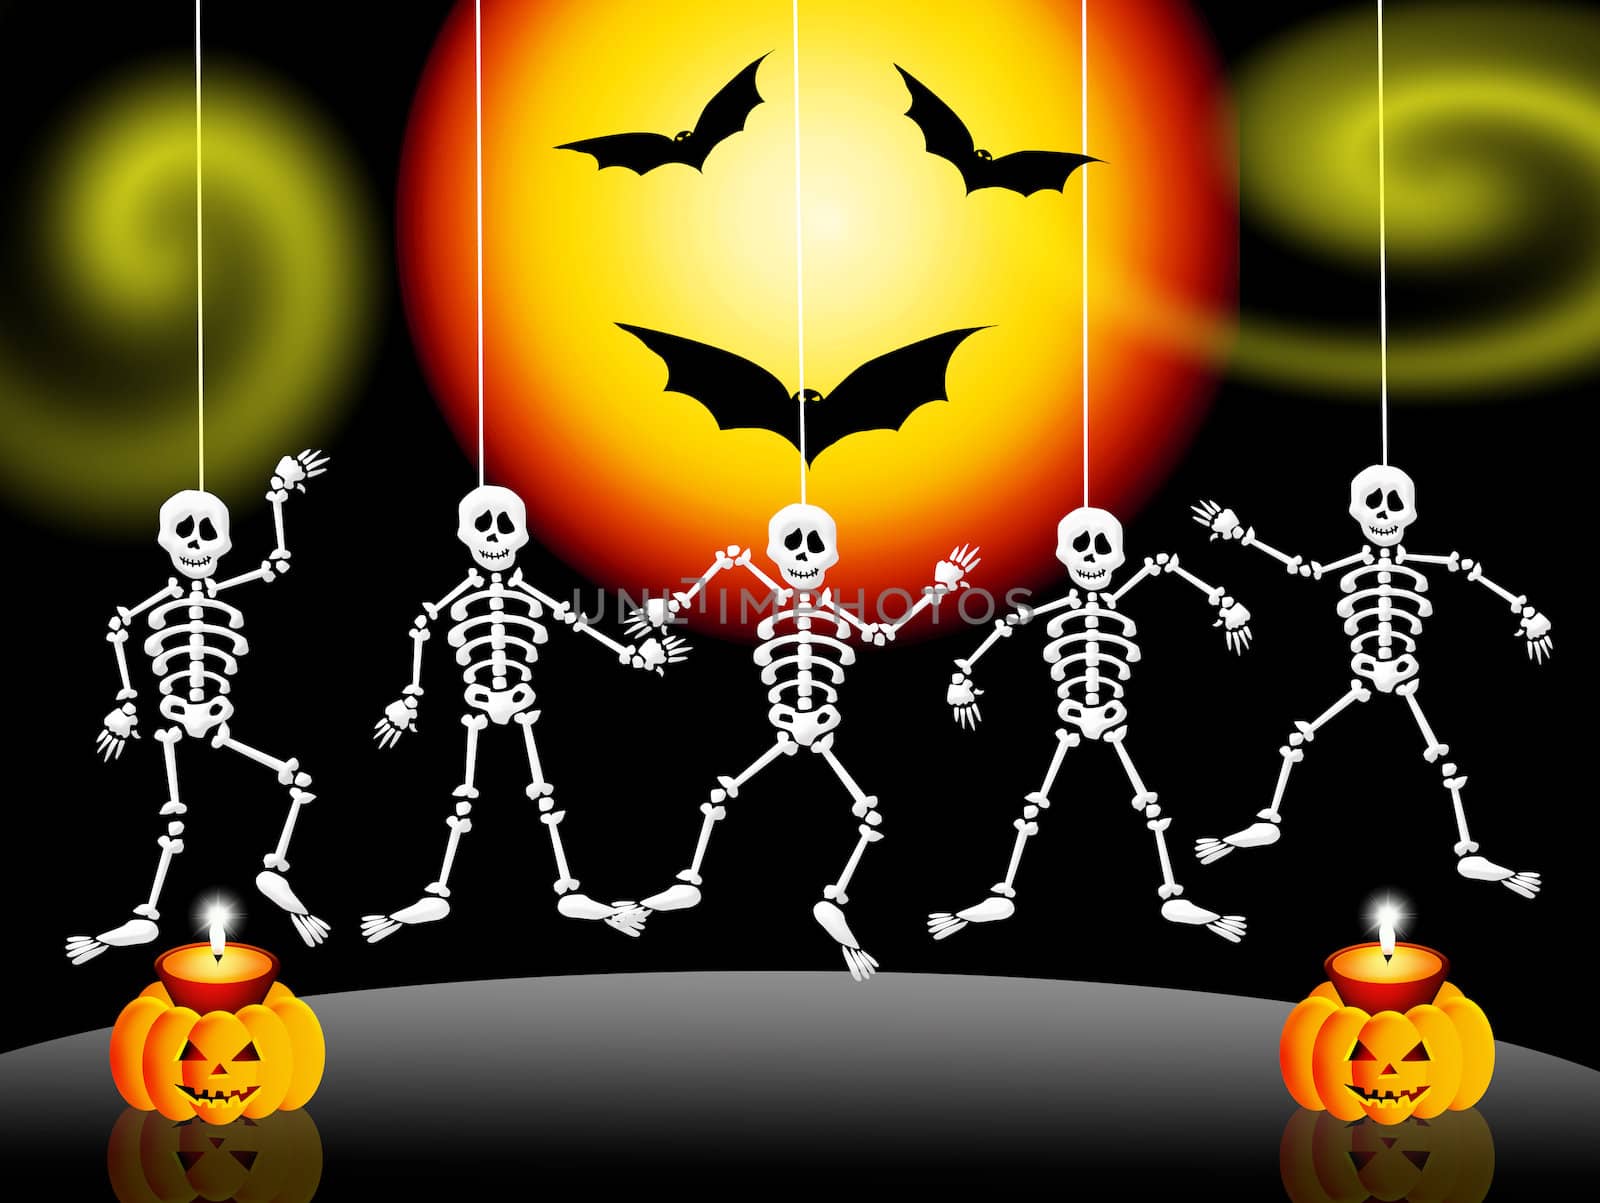 skeletons on Halloween night